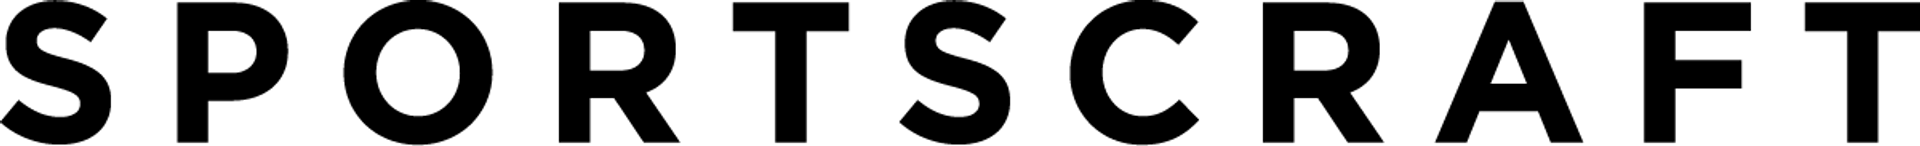 SPORTSCRAFT logo of current flyer